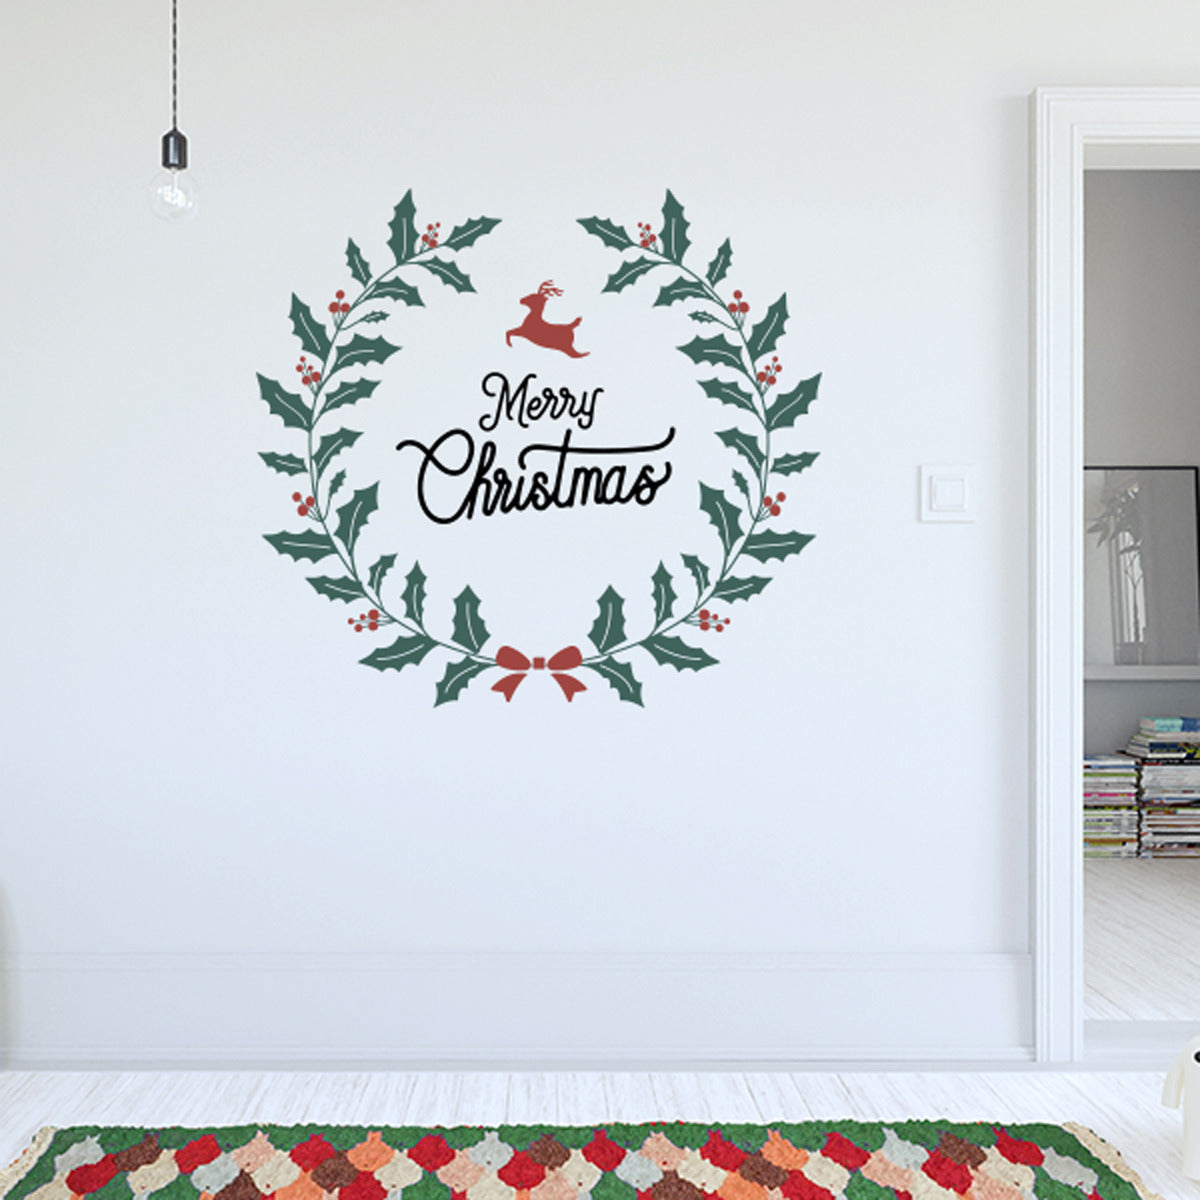 Merry Christmas Wreath Wall Sticker